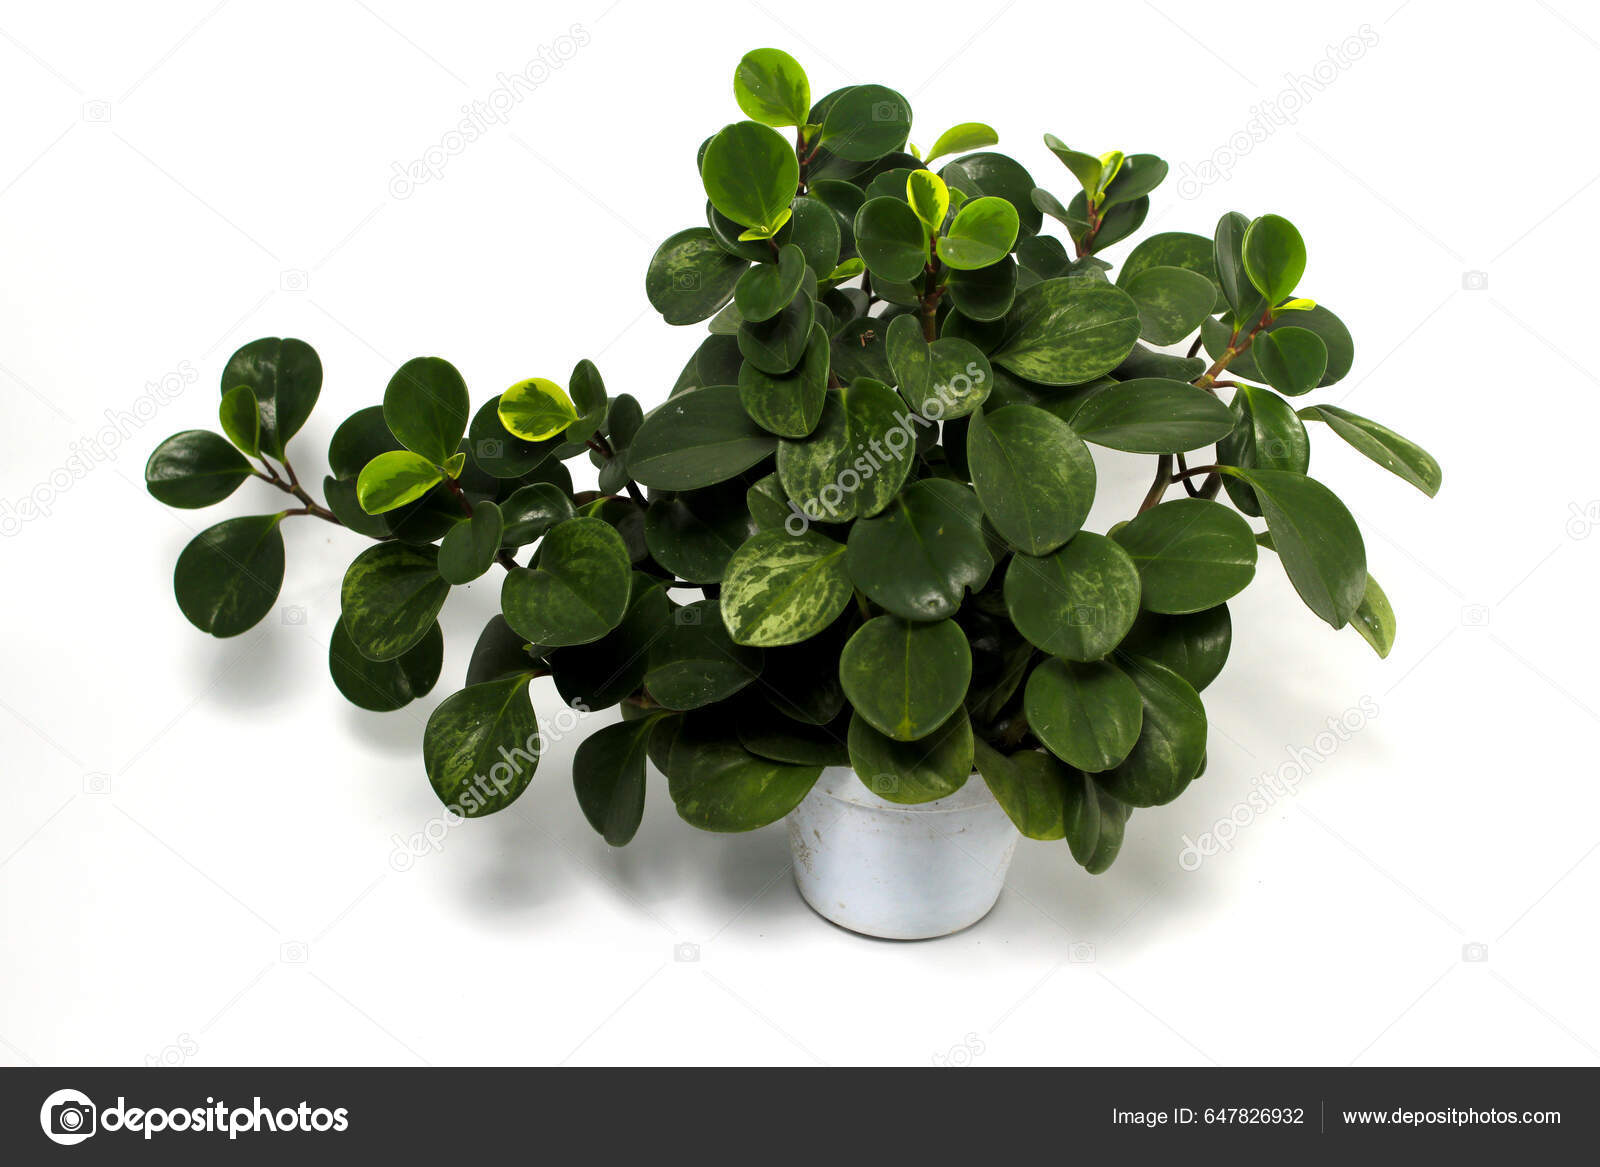 Baby rubberplant Stockfotos, lizenzfreie Baby rubberplant Bilder |  Depositphotos